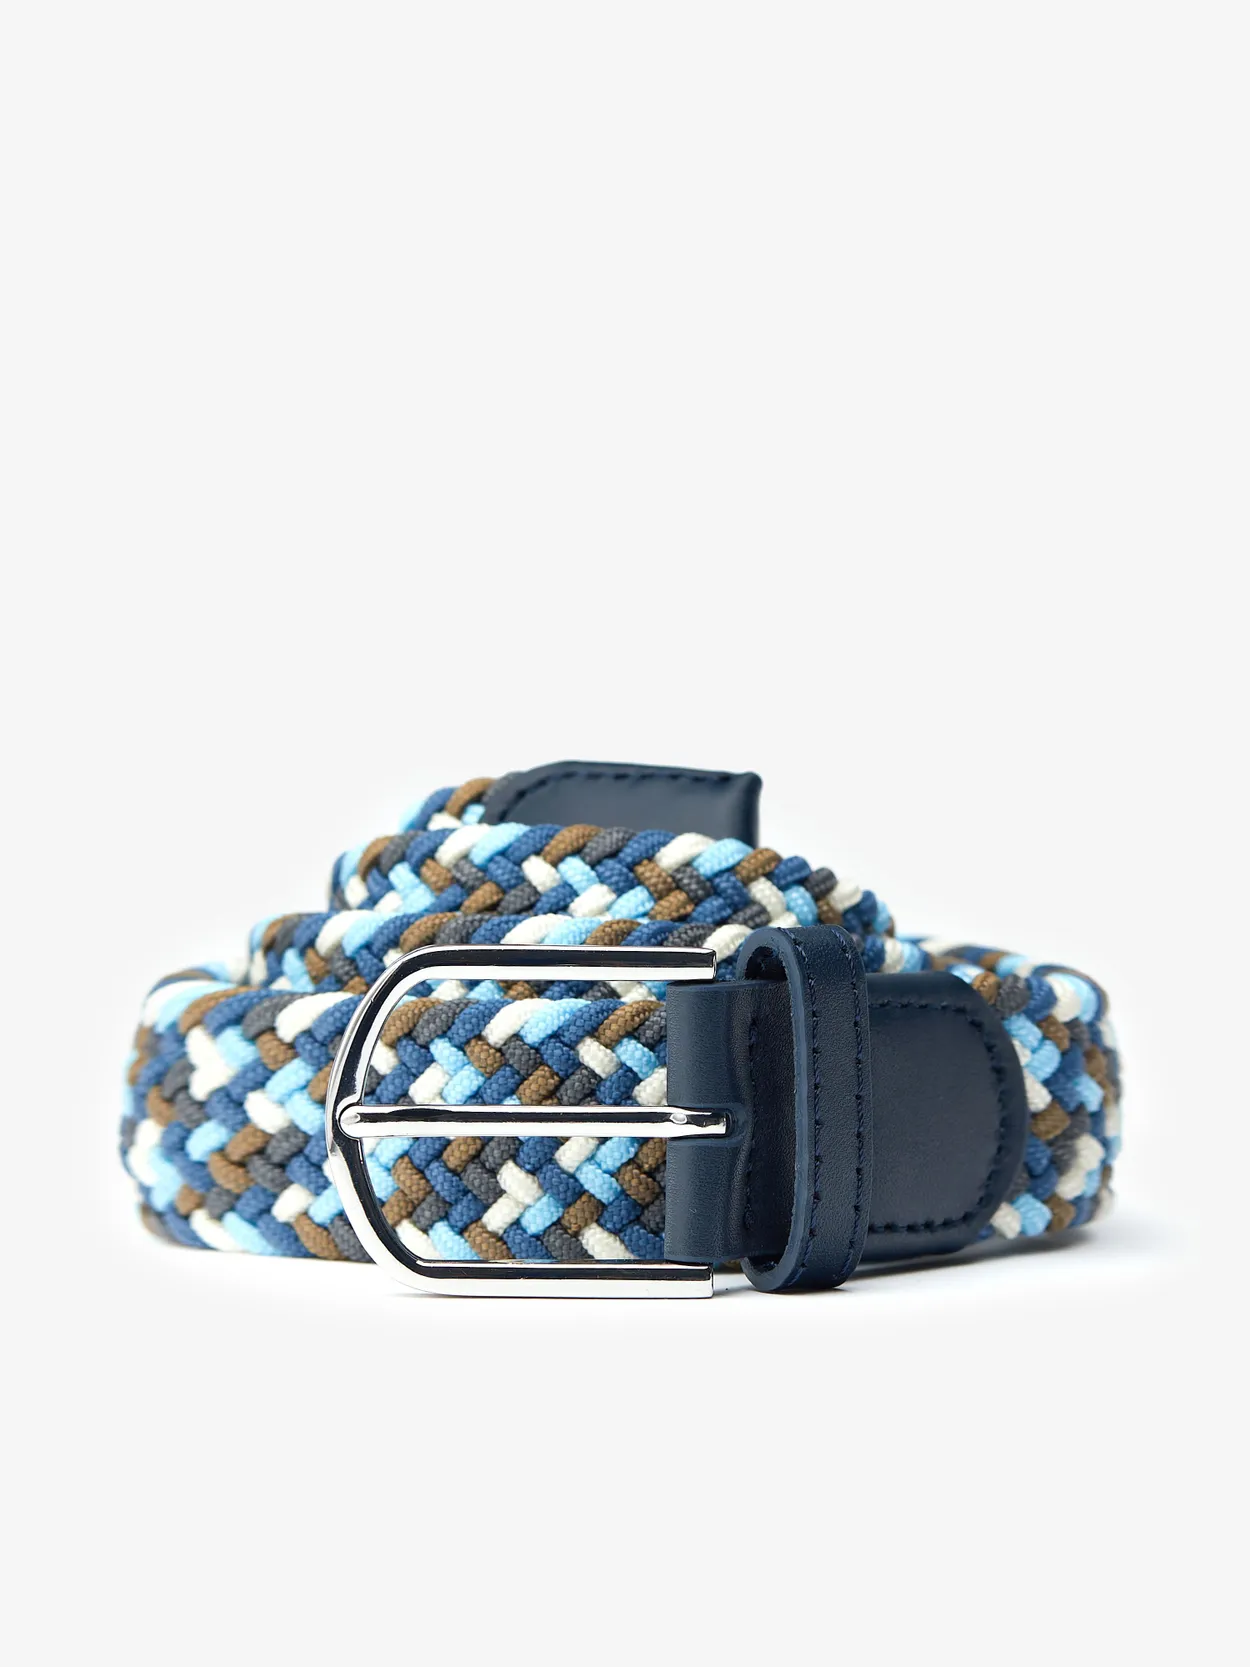 Blue & White Braided Belt